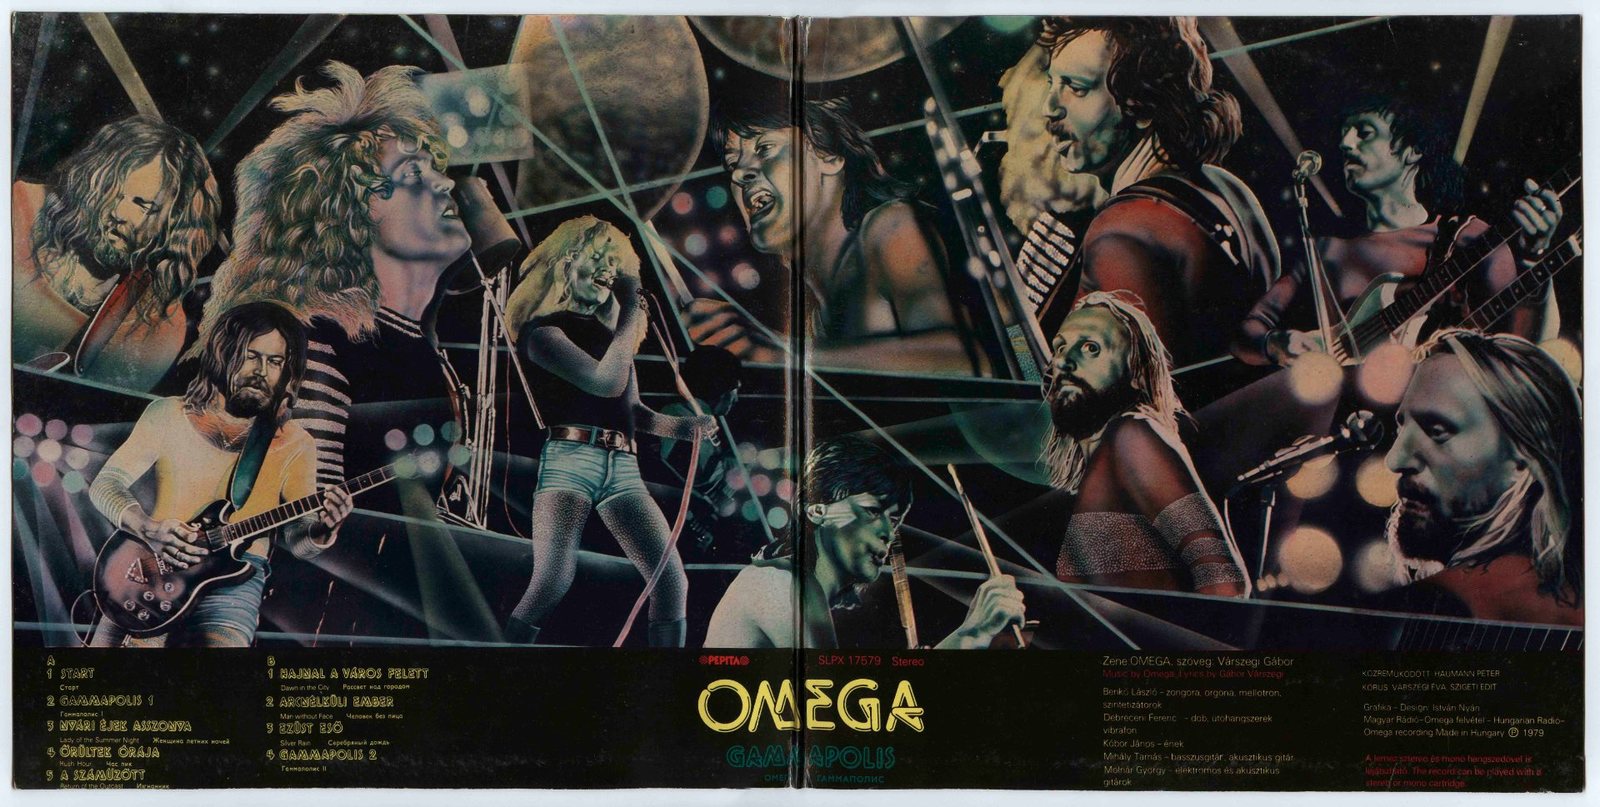 Omega 1979 Gammapolis LP inner рррр.jpg